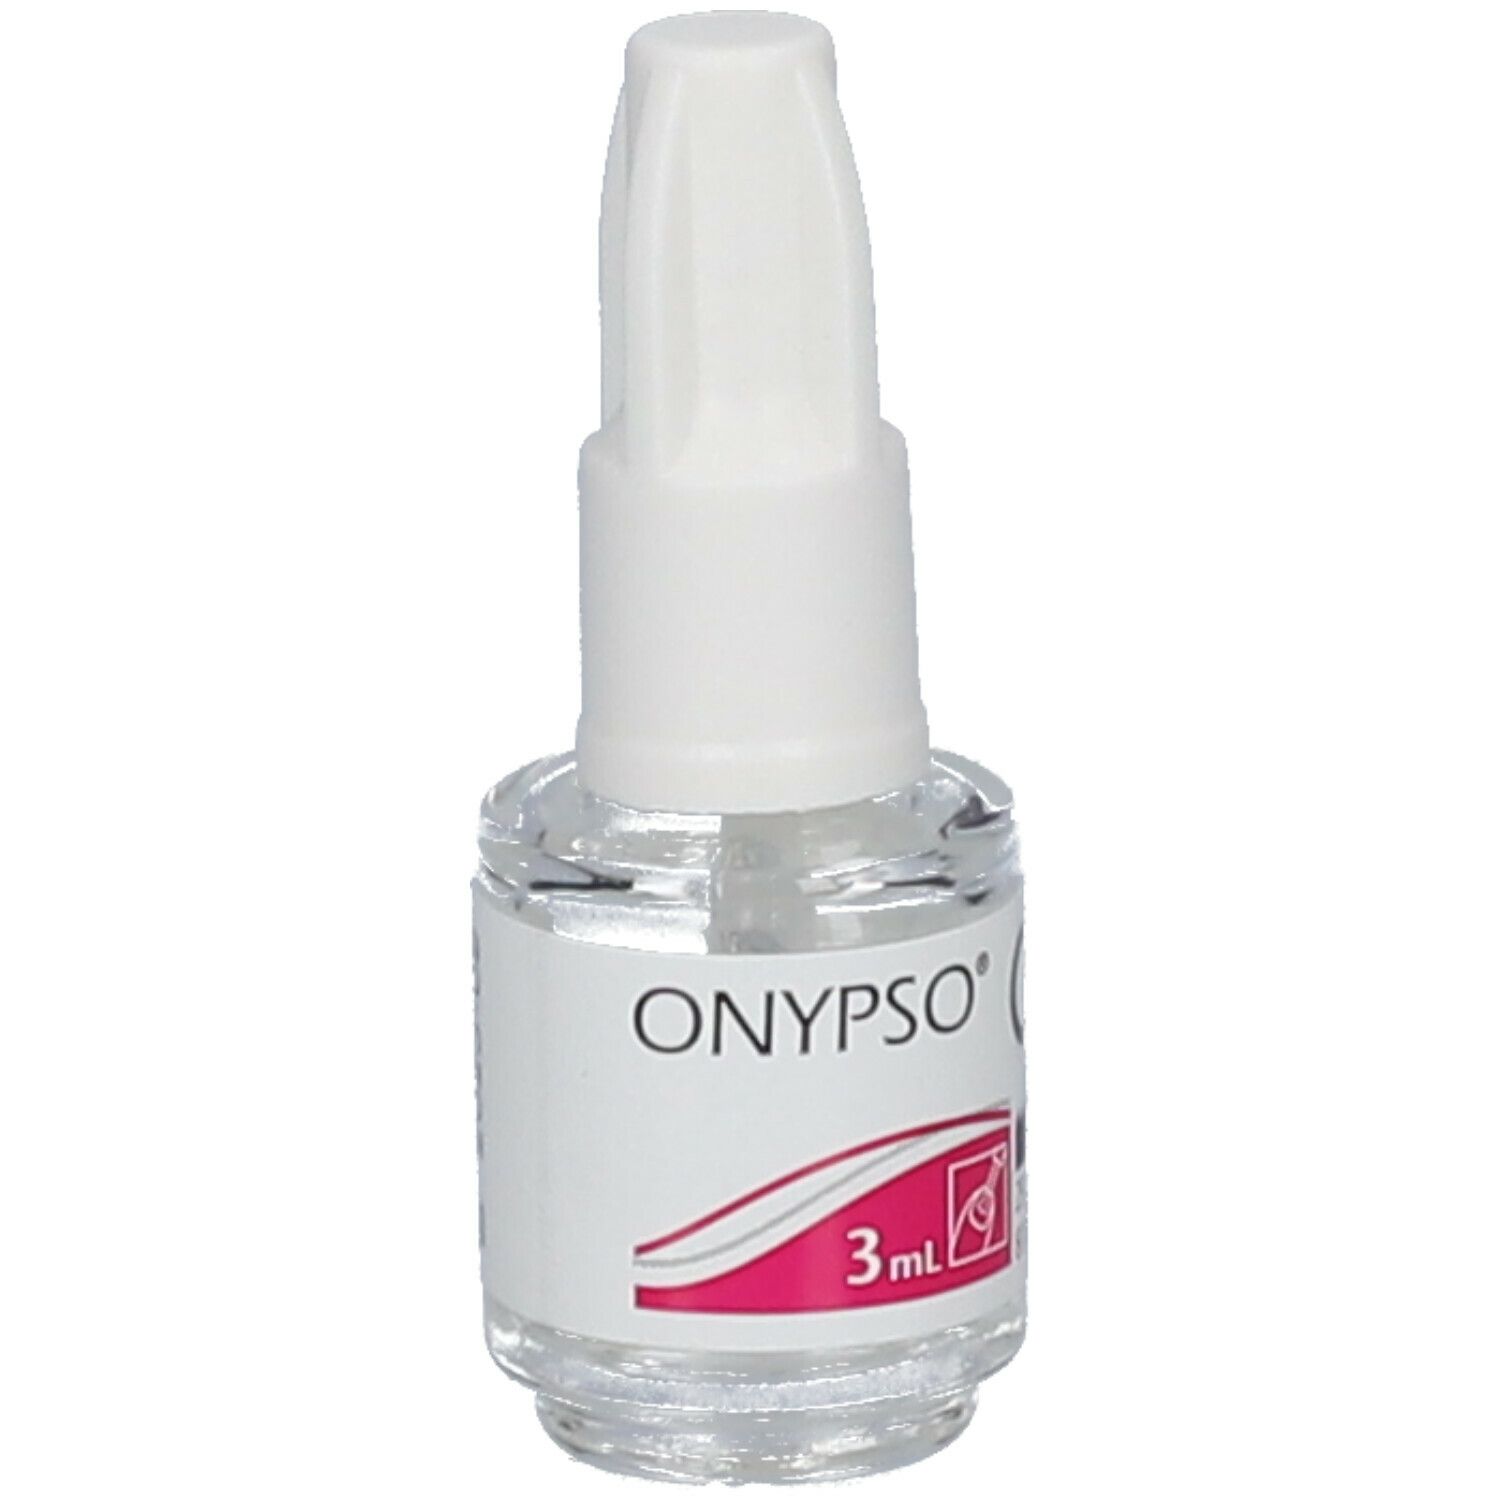 Onypso® Nagellack 3 ml